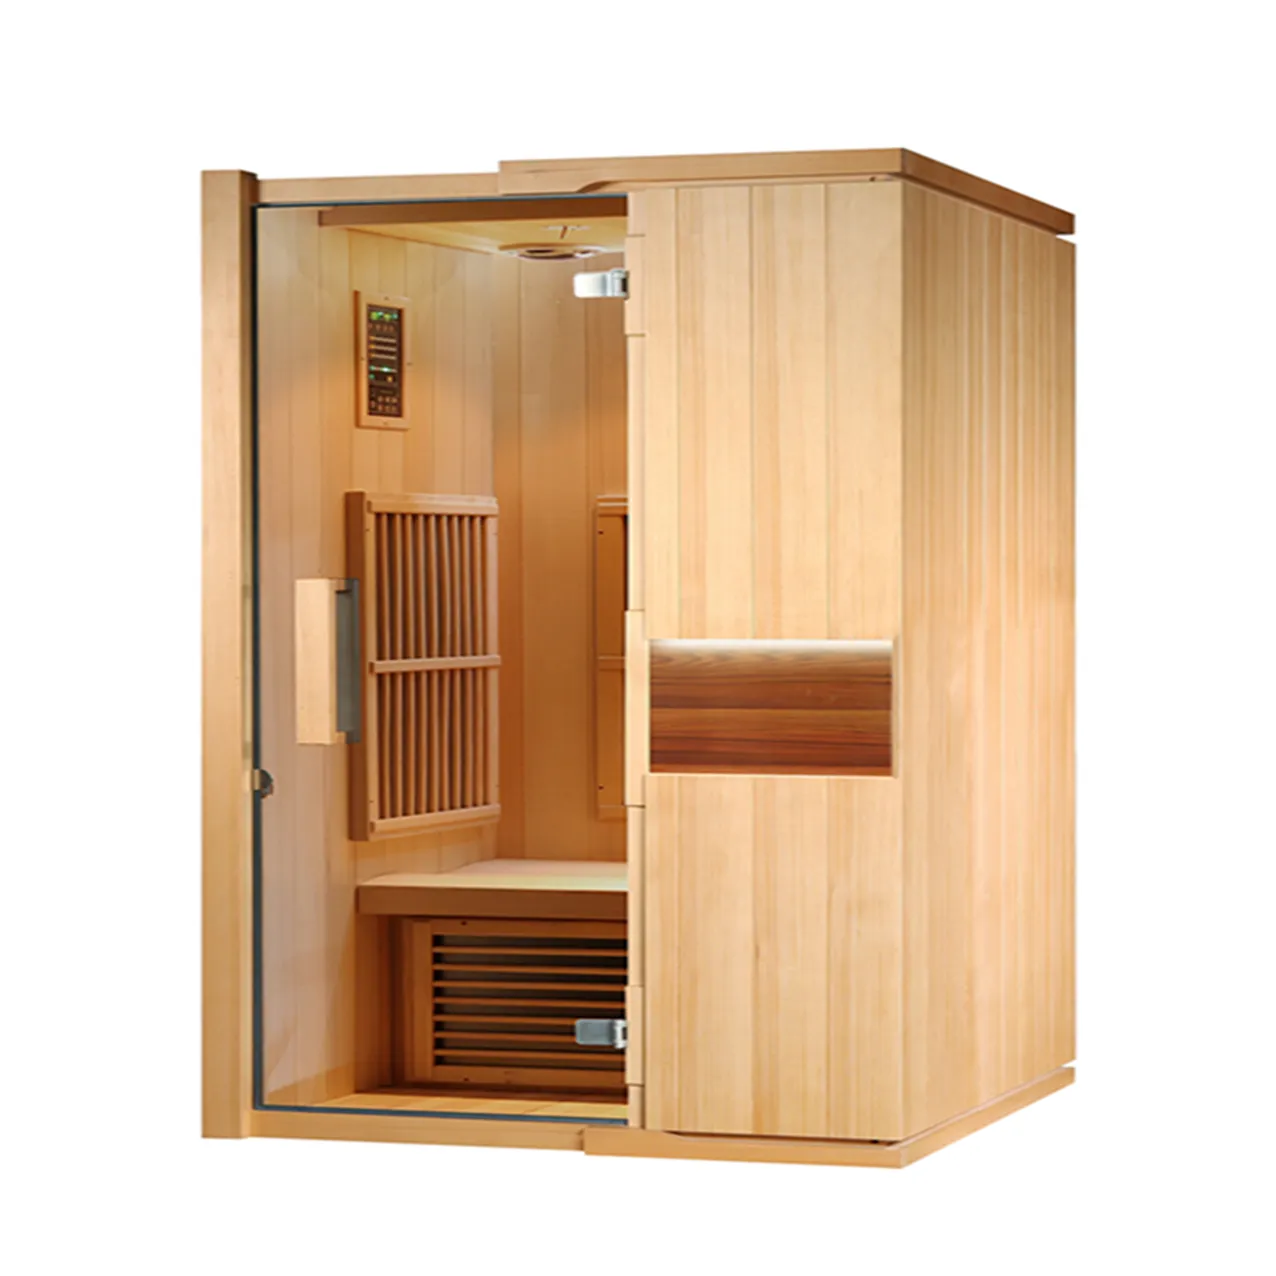 Hemlock Infrared Sauna Room Wood 3 Person Far Infrared Sauna House Hemlock Wooden Sauna Cabin